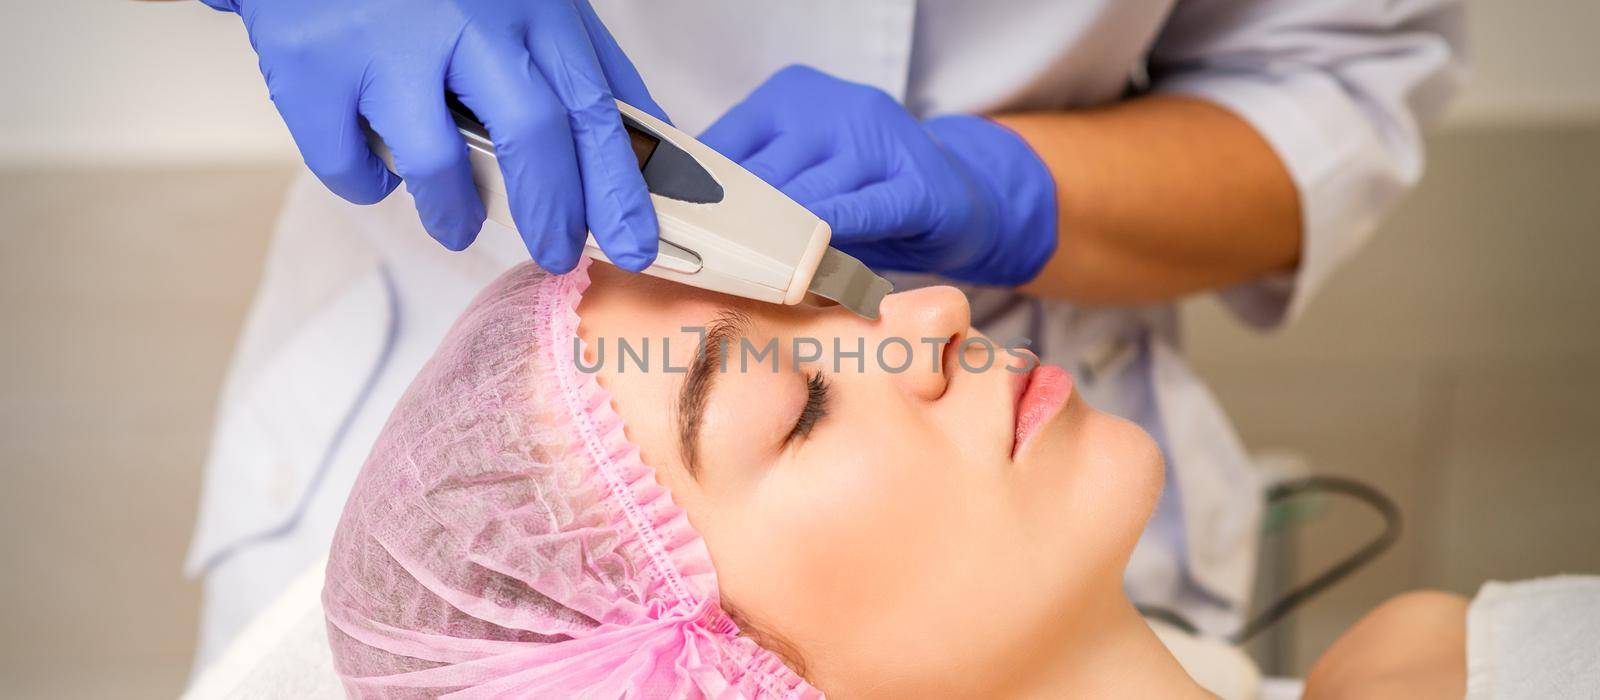 Young caucasian woman receiving facial skin cleaning by ultrasonic cosmetology face equipment in a medical salon. by okskukuruza